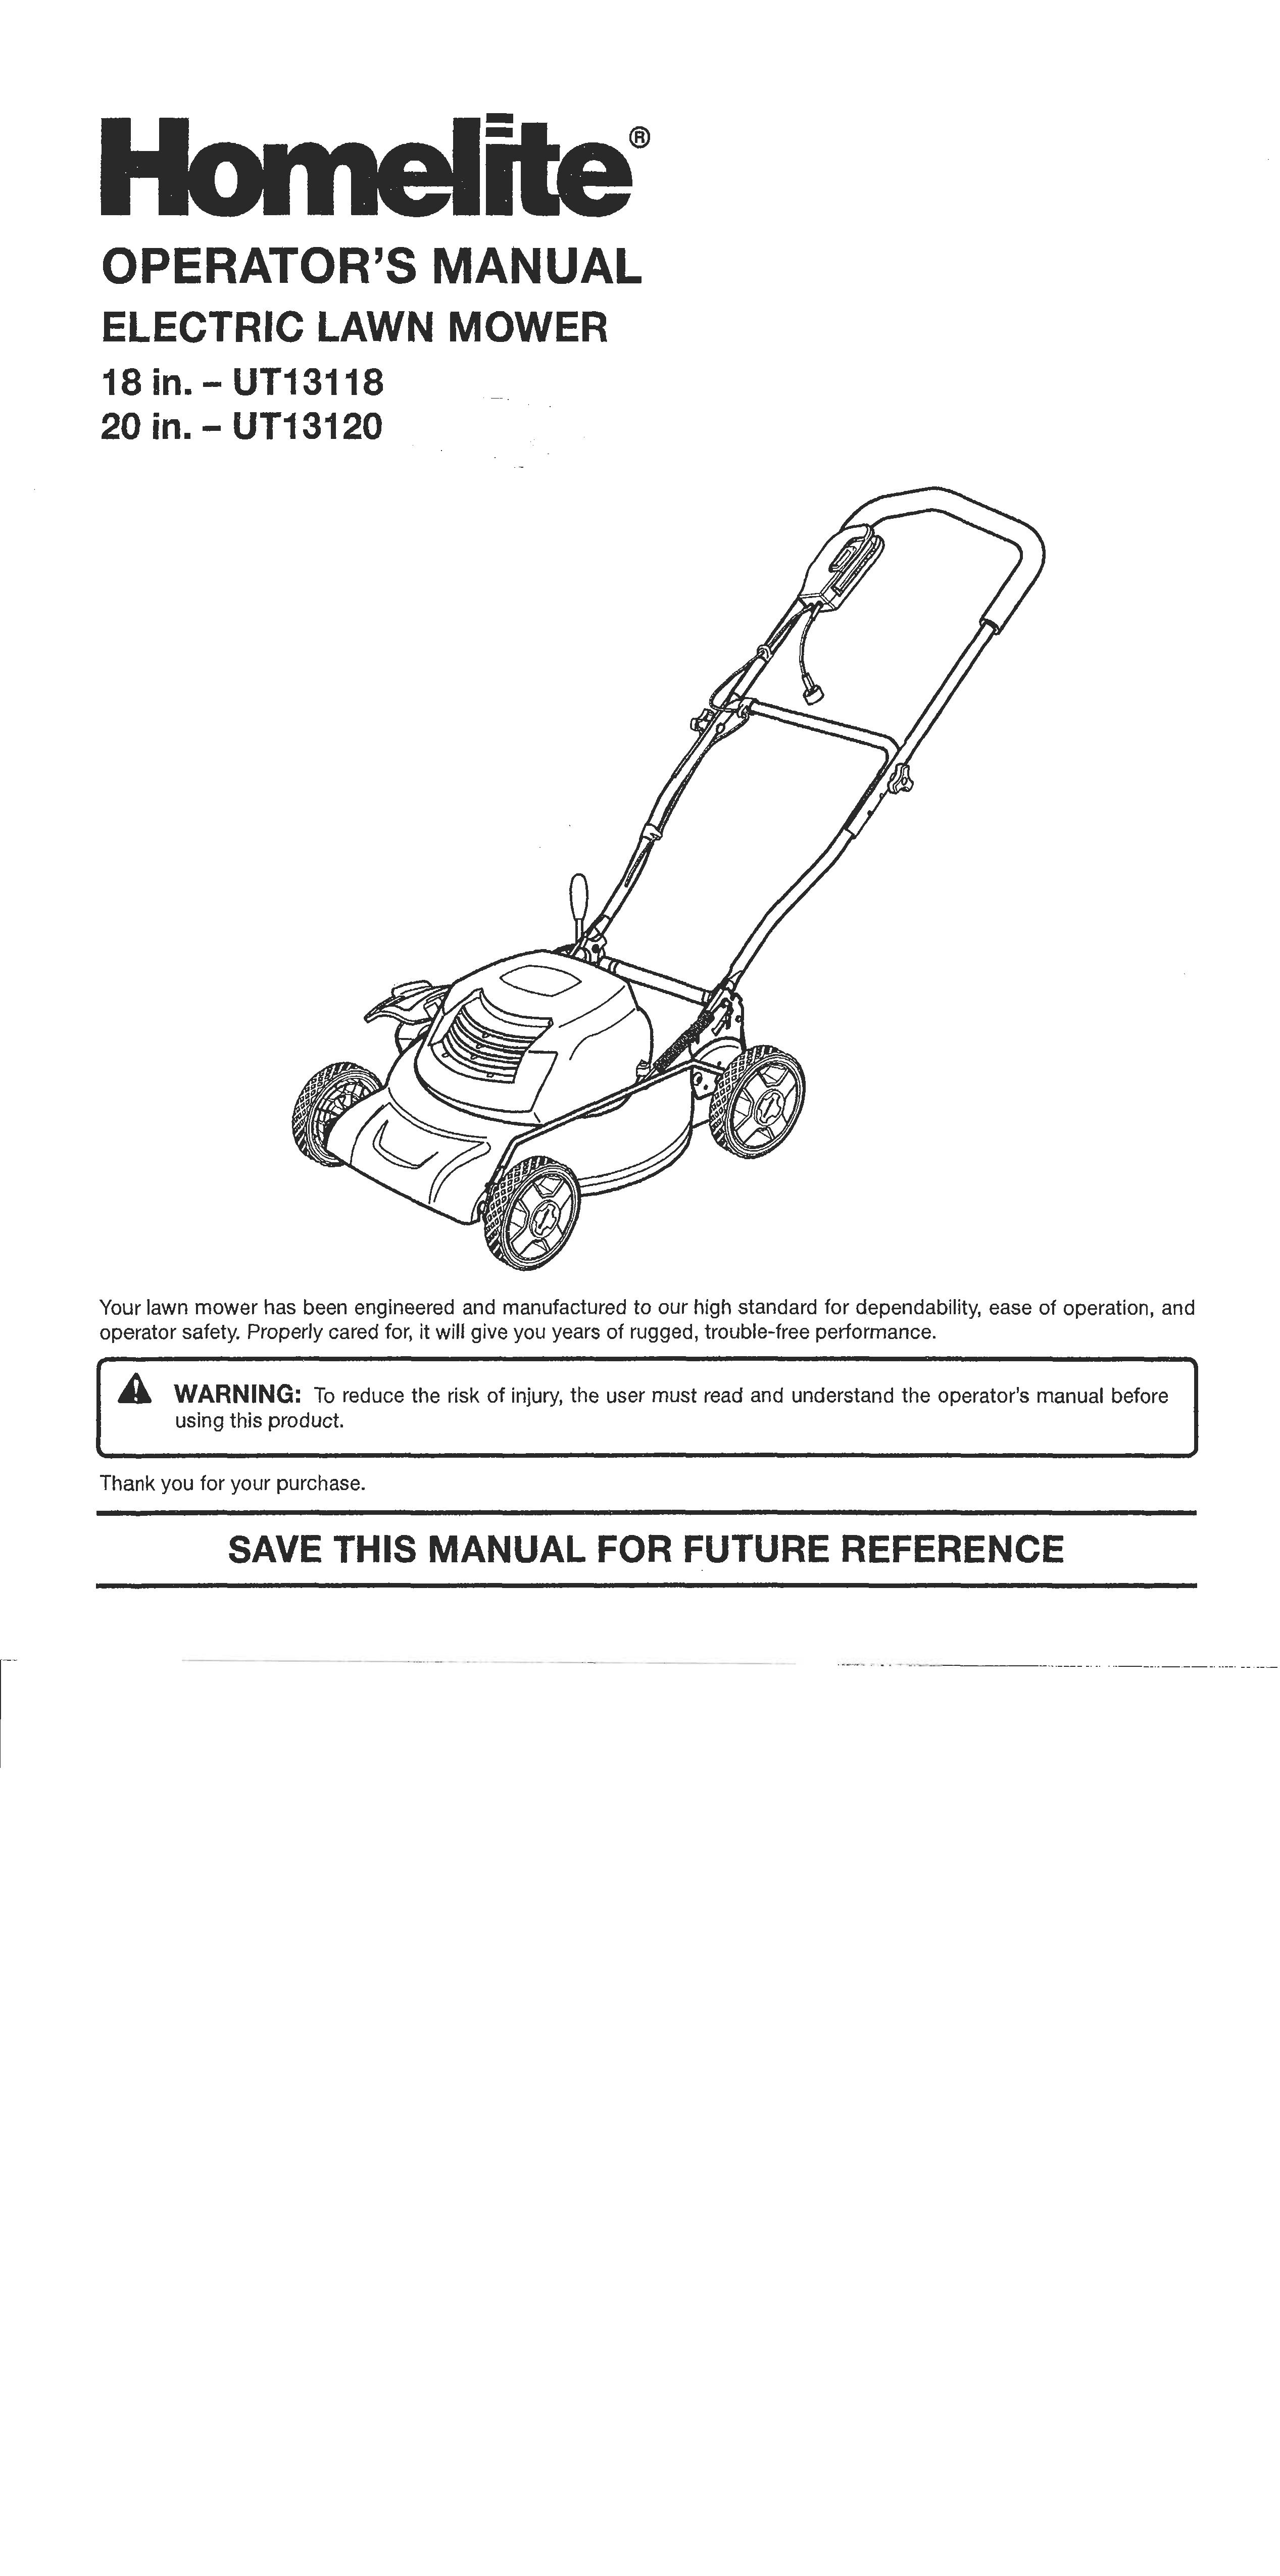 American Lawn Mower Co. UT13118 Lawn Mower User Manual